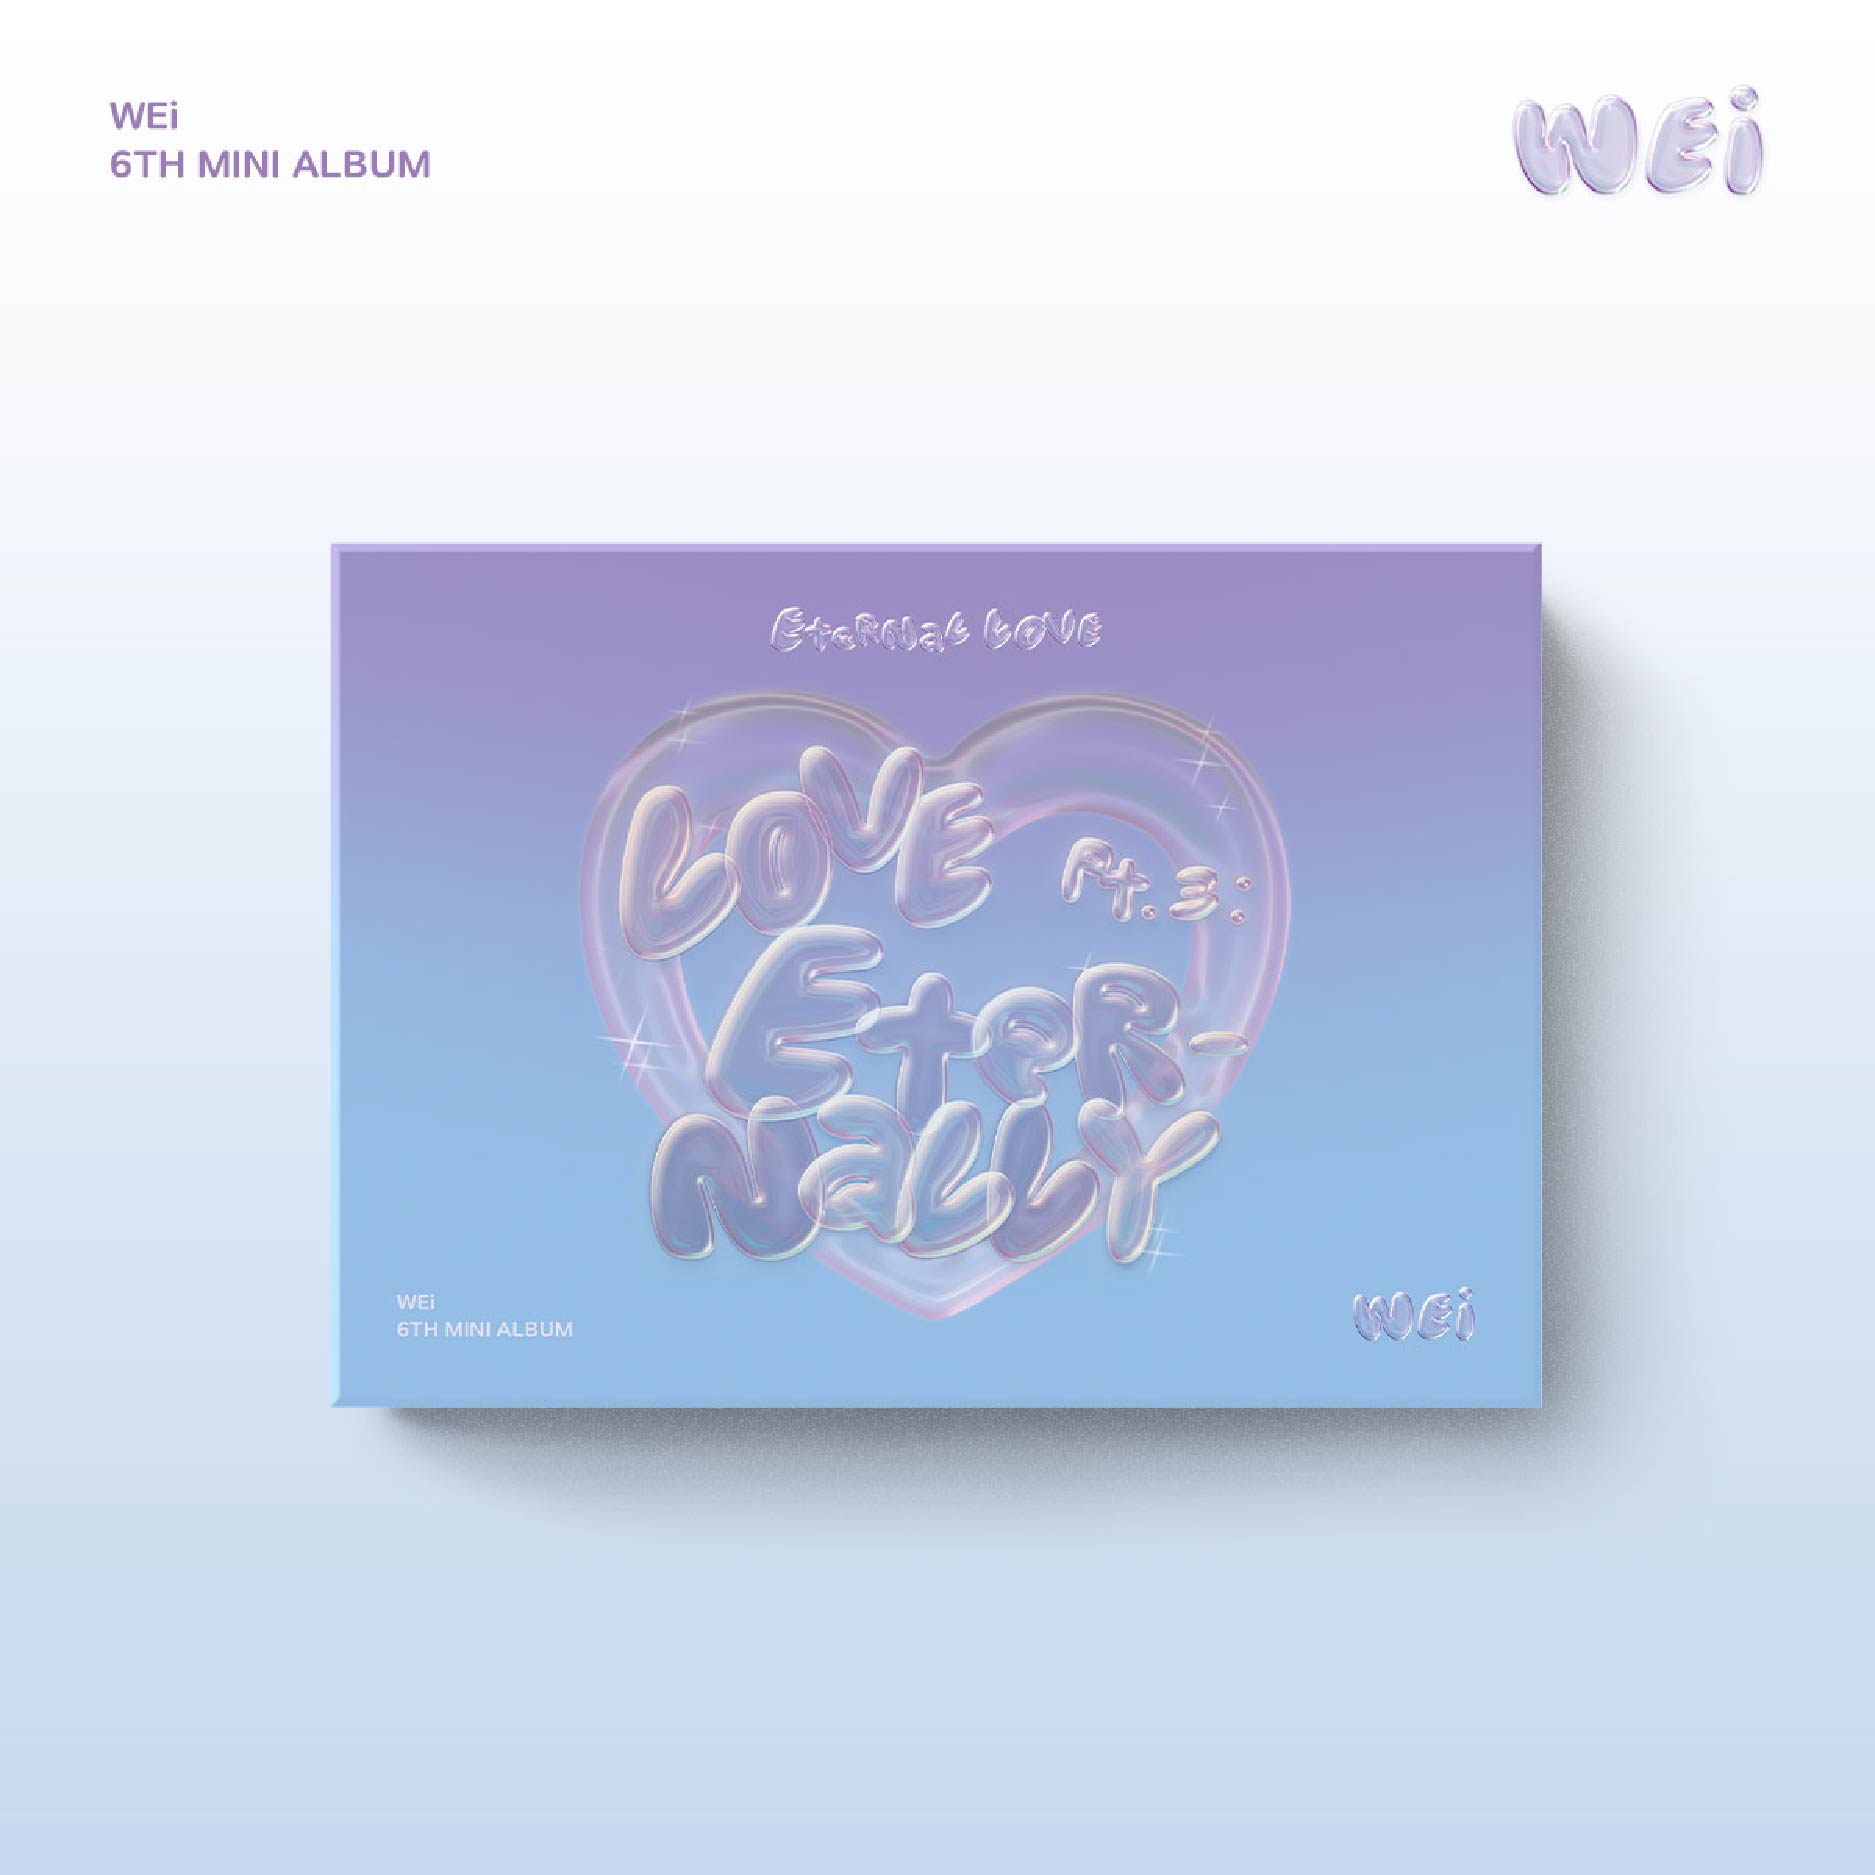 WEi - 6th Mini Album [Love Pt.3 : Eternally] (PocaAlbum Ver.) (Eternal love Ver.)